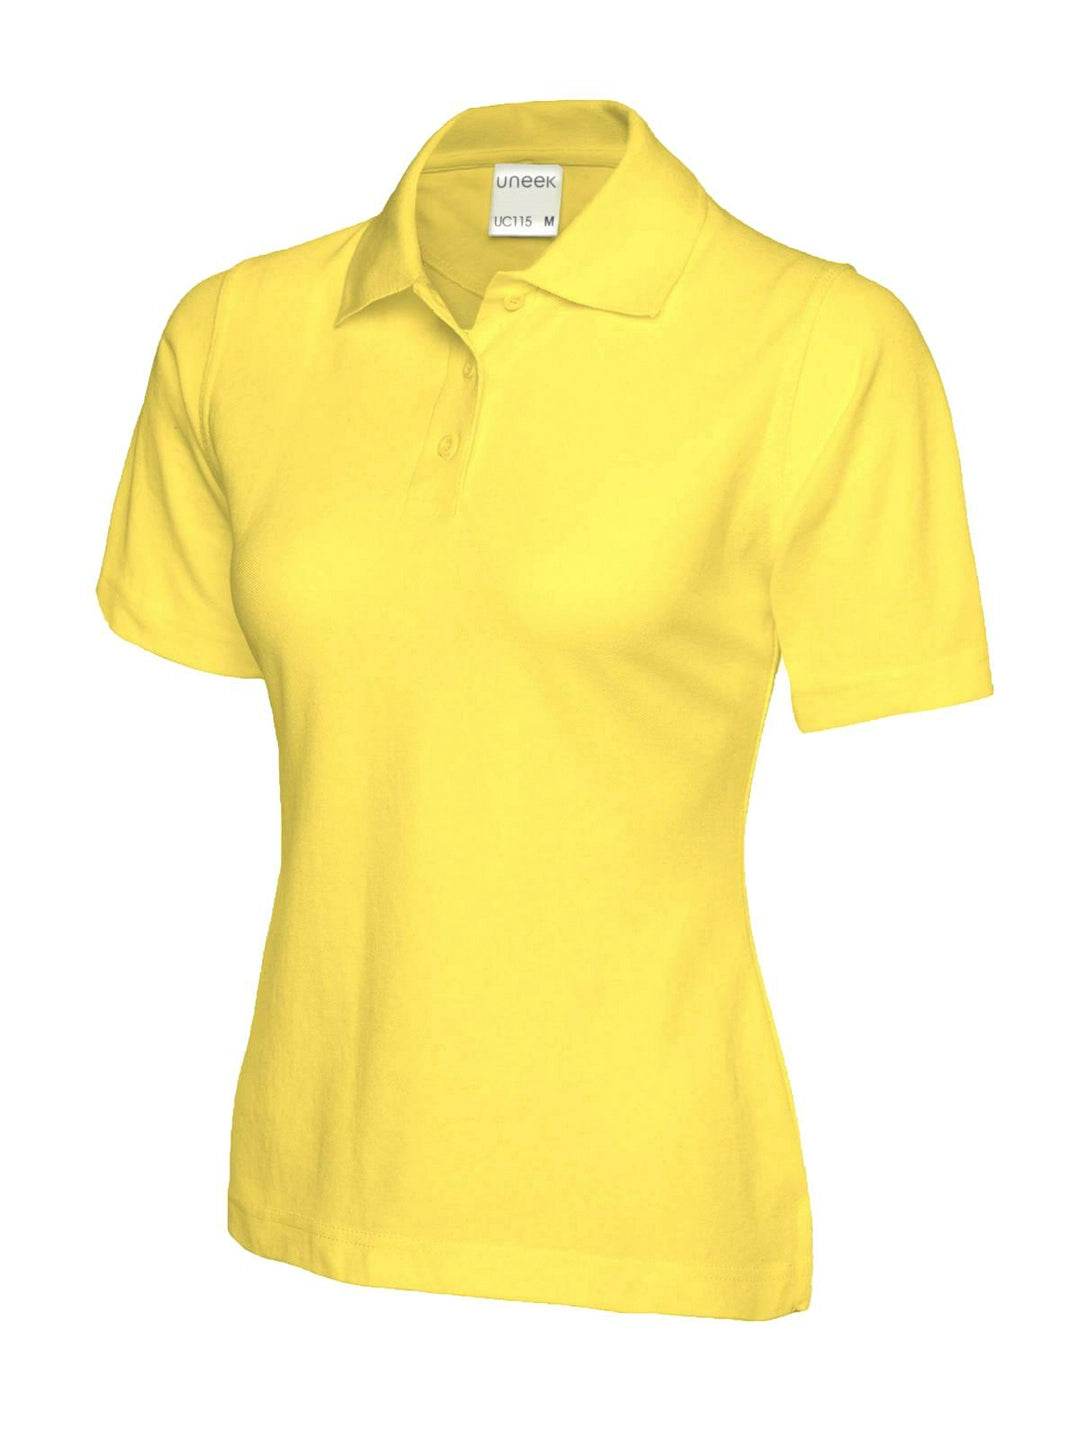 Uneek Clothing UC115 Ladies Polo Shirt - COOZO